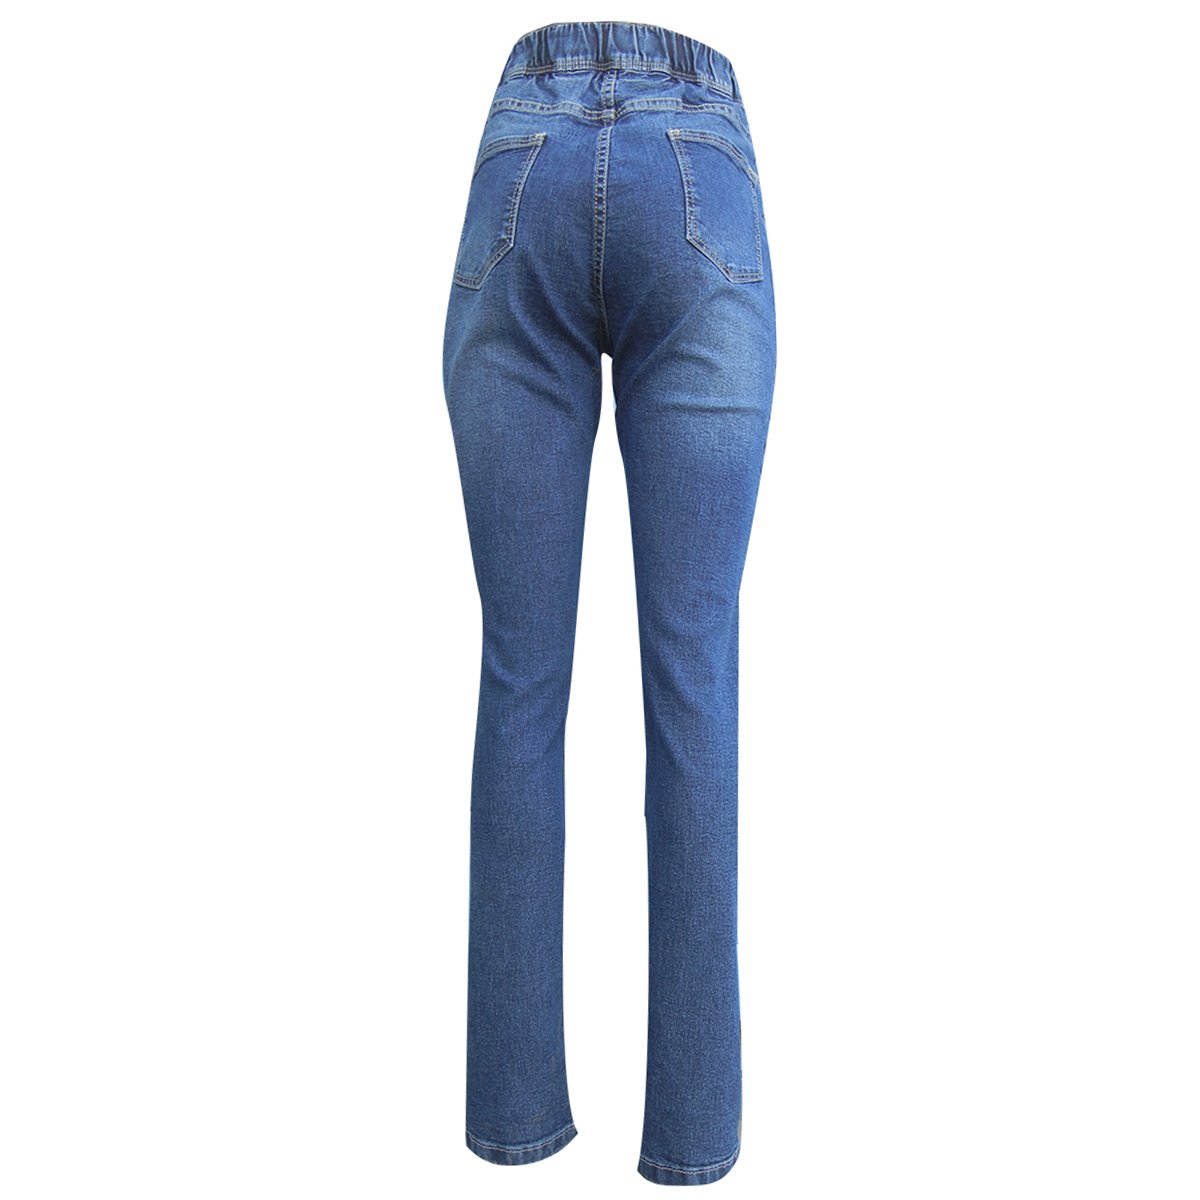 Jeans Vitos, Corte Skinny